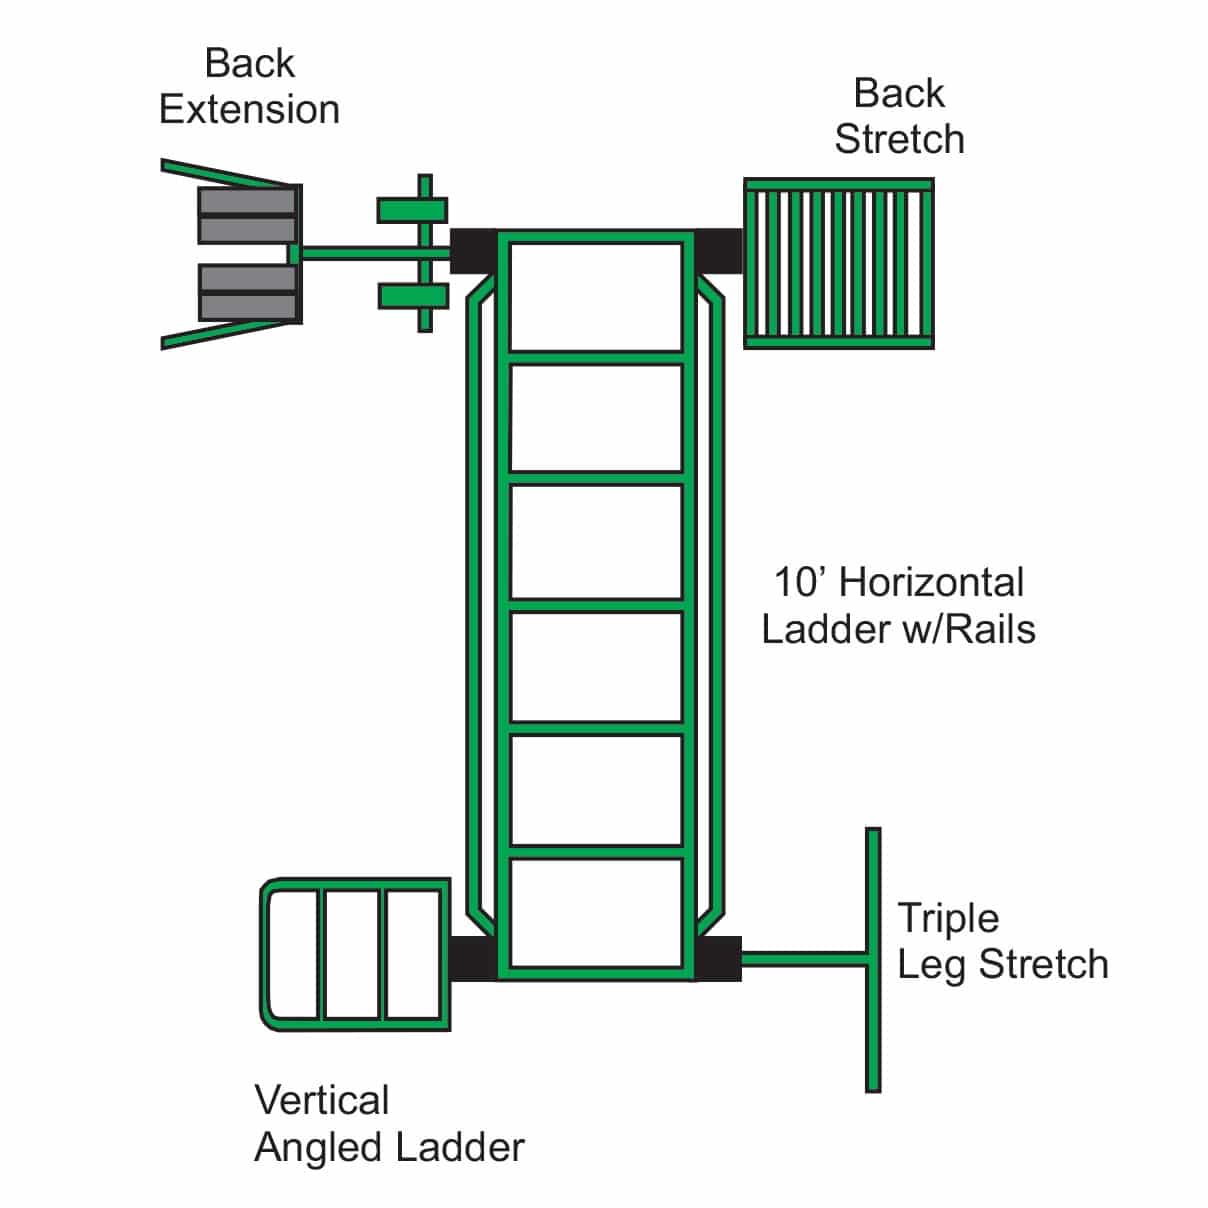 StayFIT - Leg Stretch - Vertical Horizontal Ladder - Back Extension Stretch